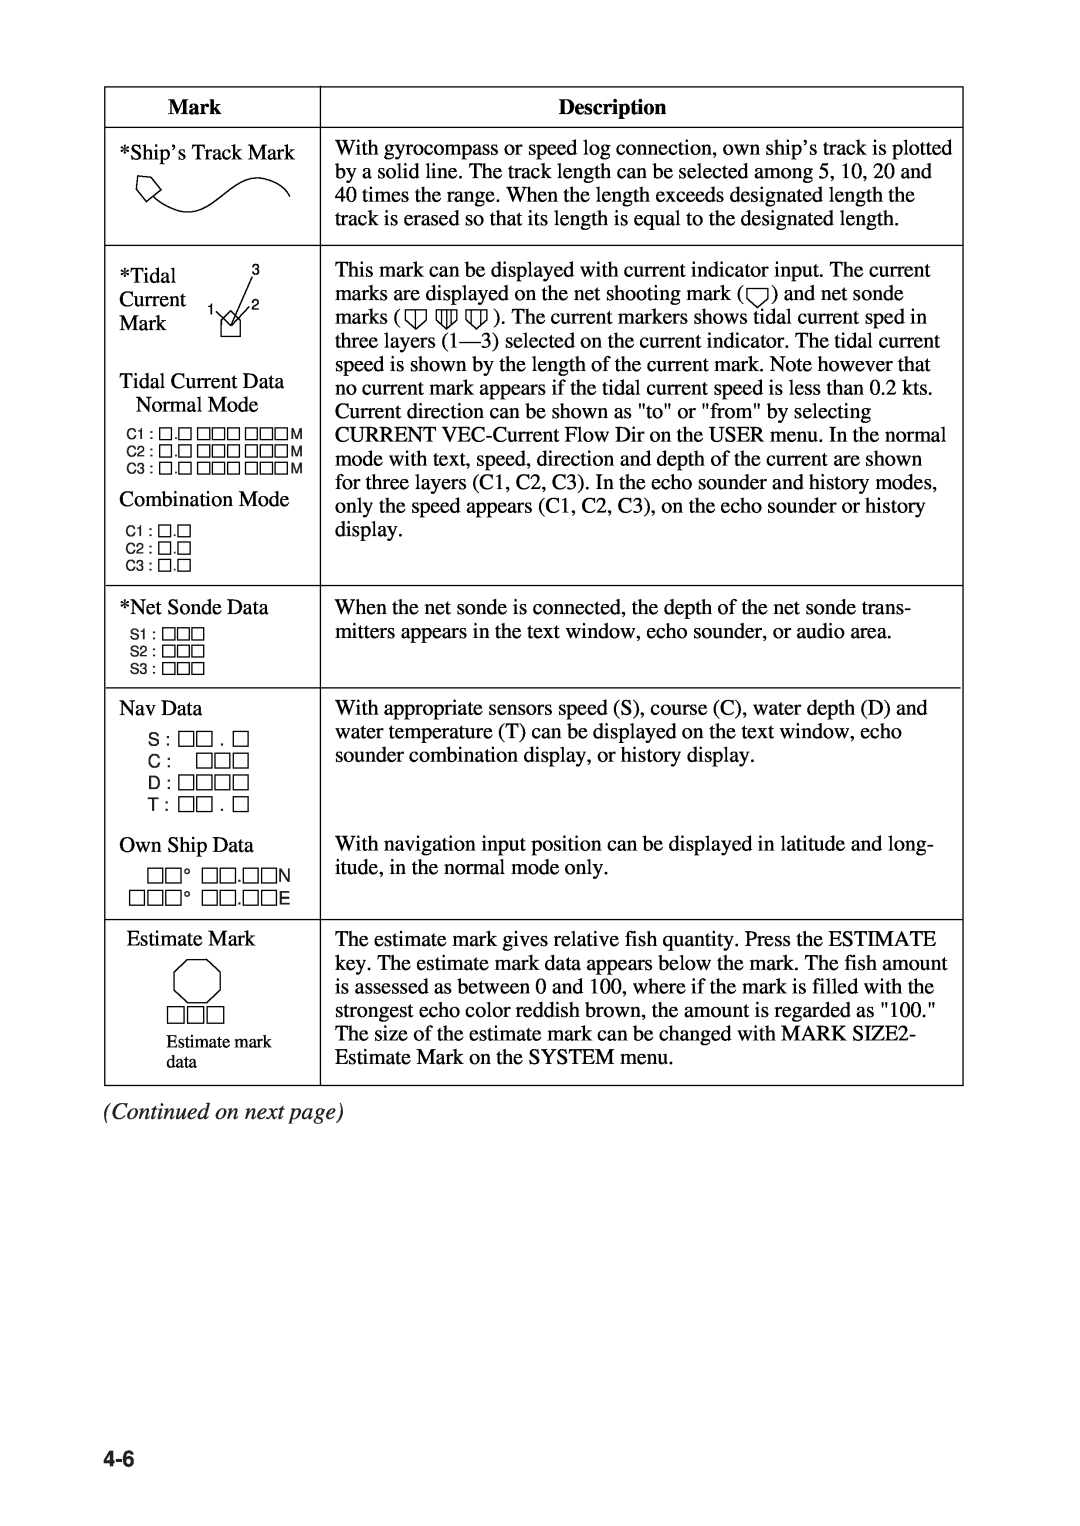 Furuno CSH-53 manual Continued on next page, Mark, Description, Estimate mark, data 